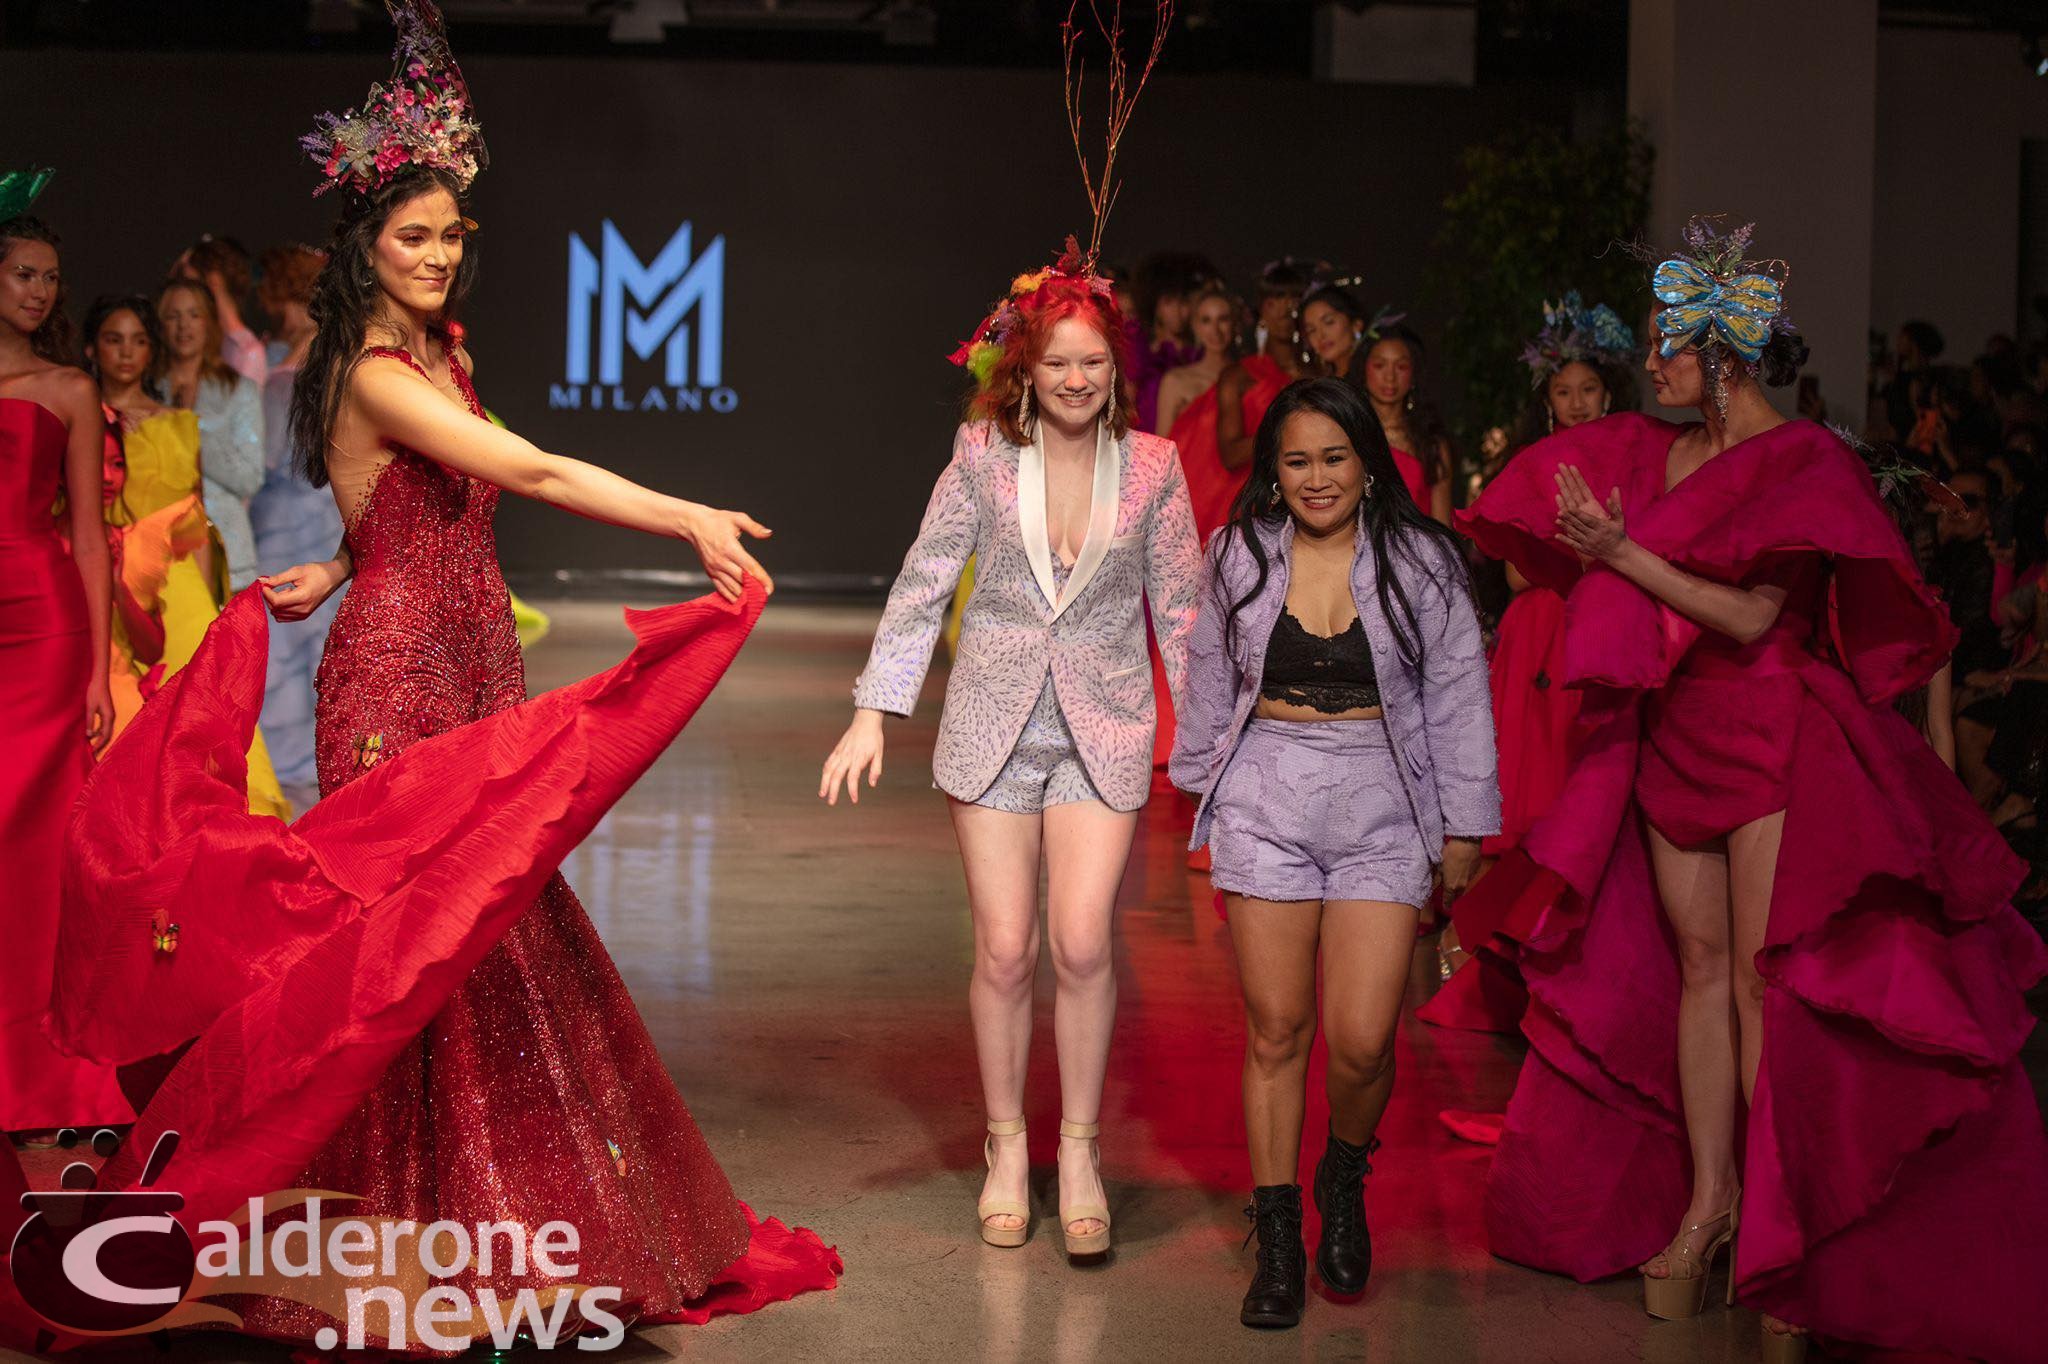 Los Angeles Fashion Week by MM Milano Calderone News